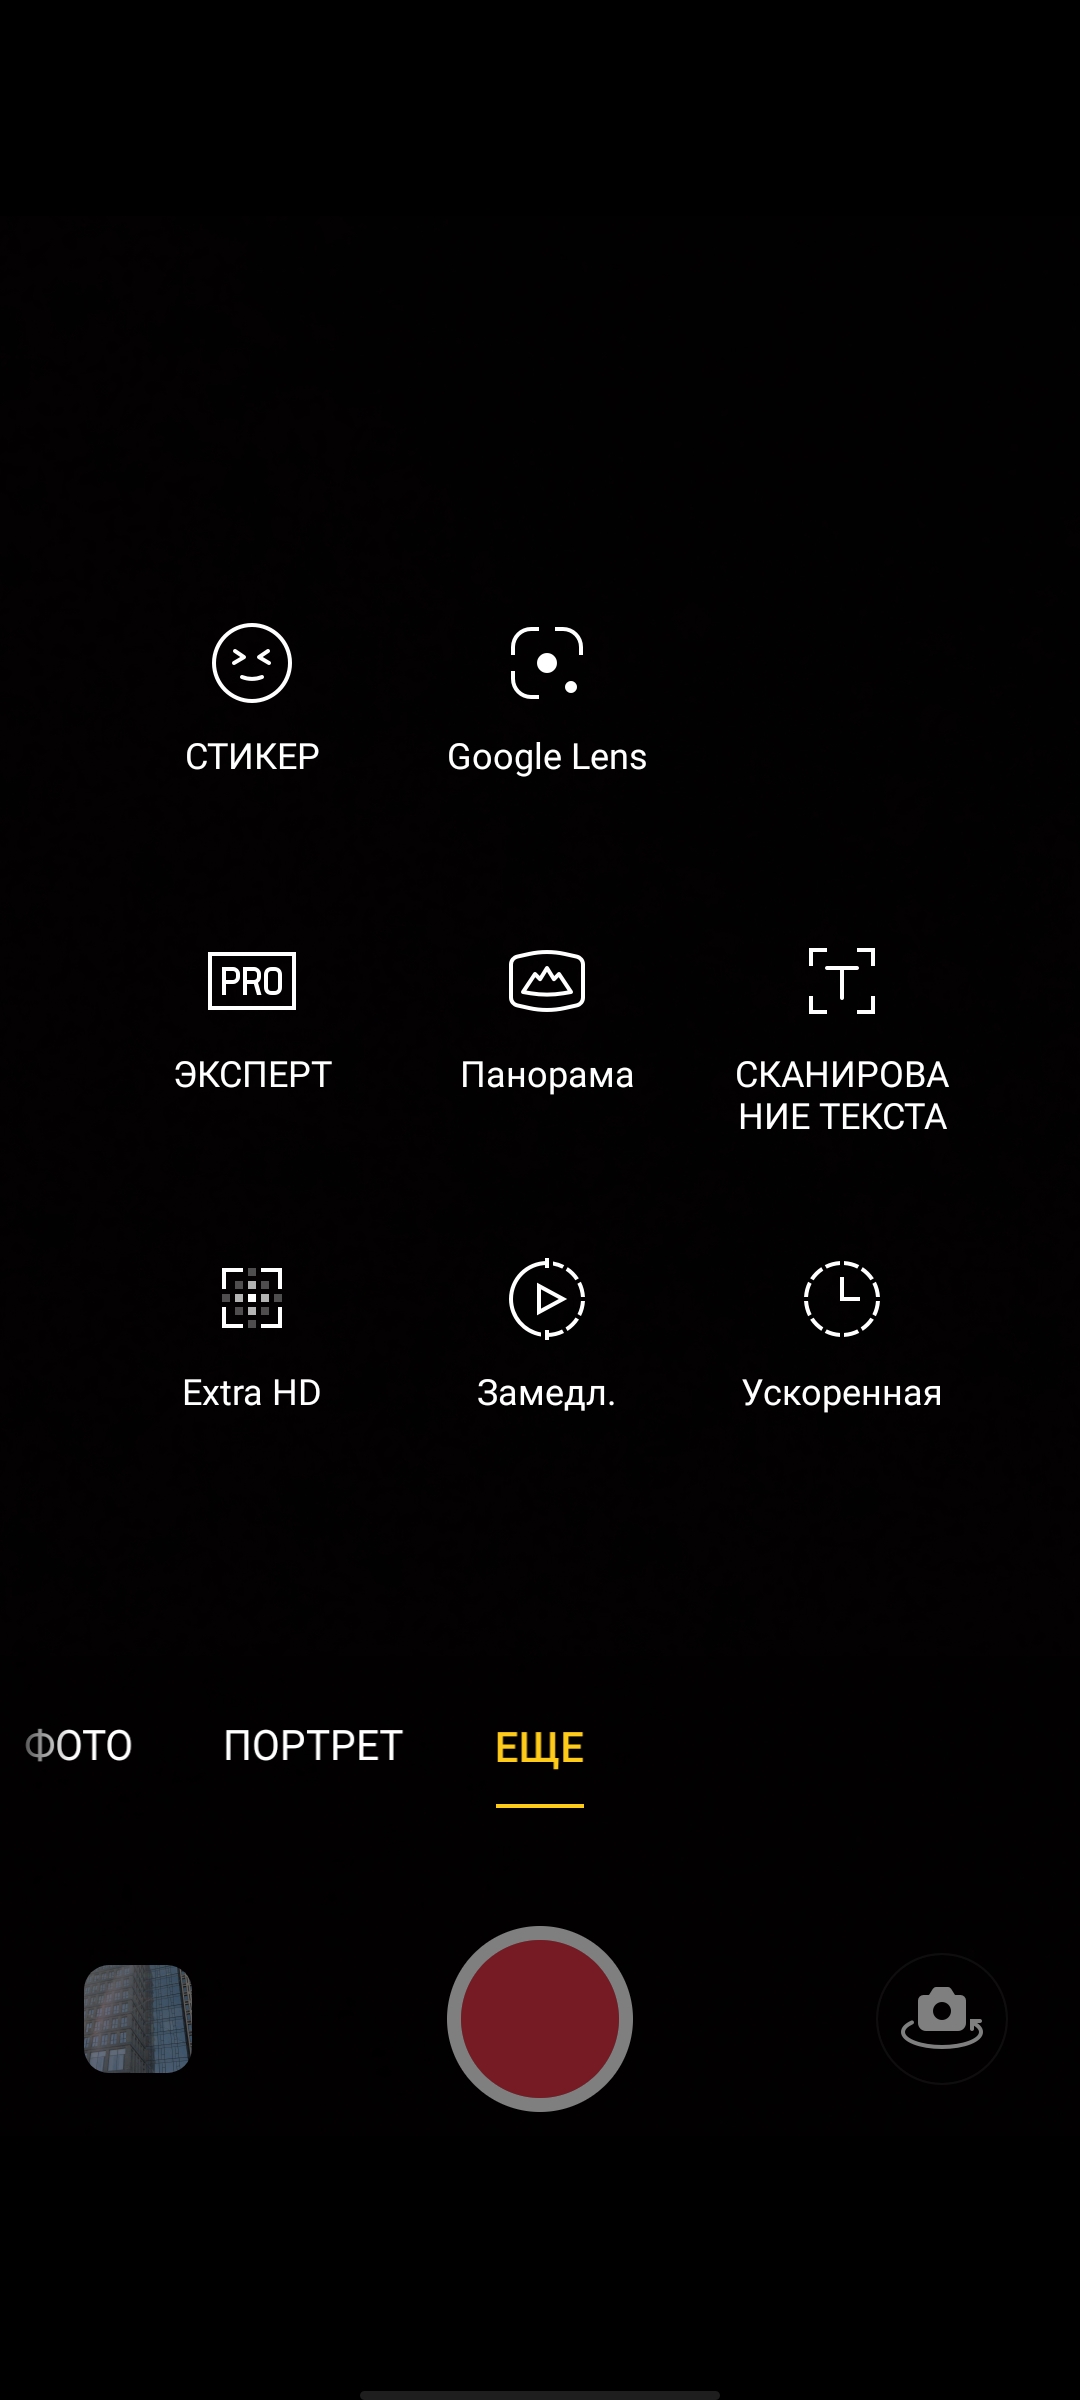 Обзор OPPO A73: смартфон за 7000 гривен, который заряжается меньше часа-289